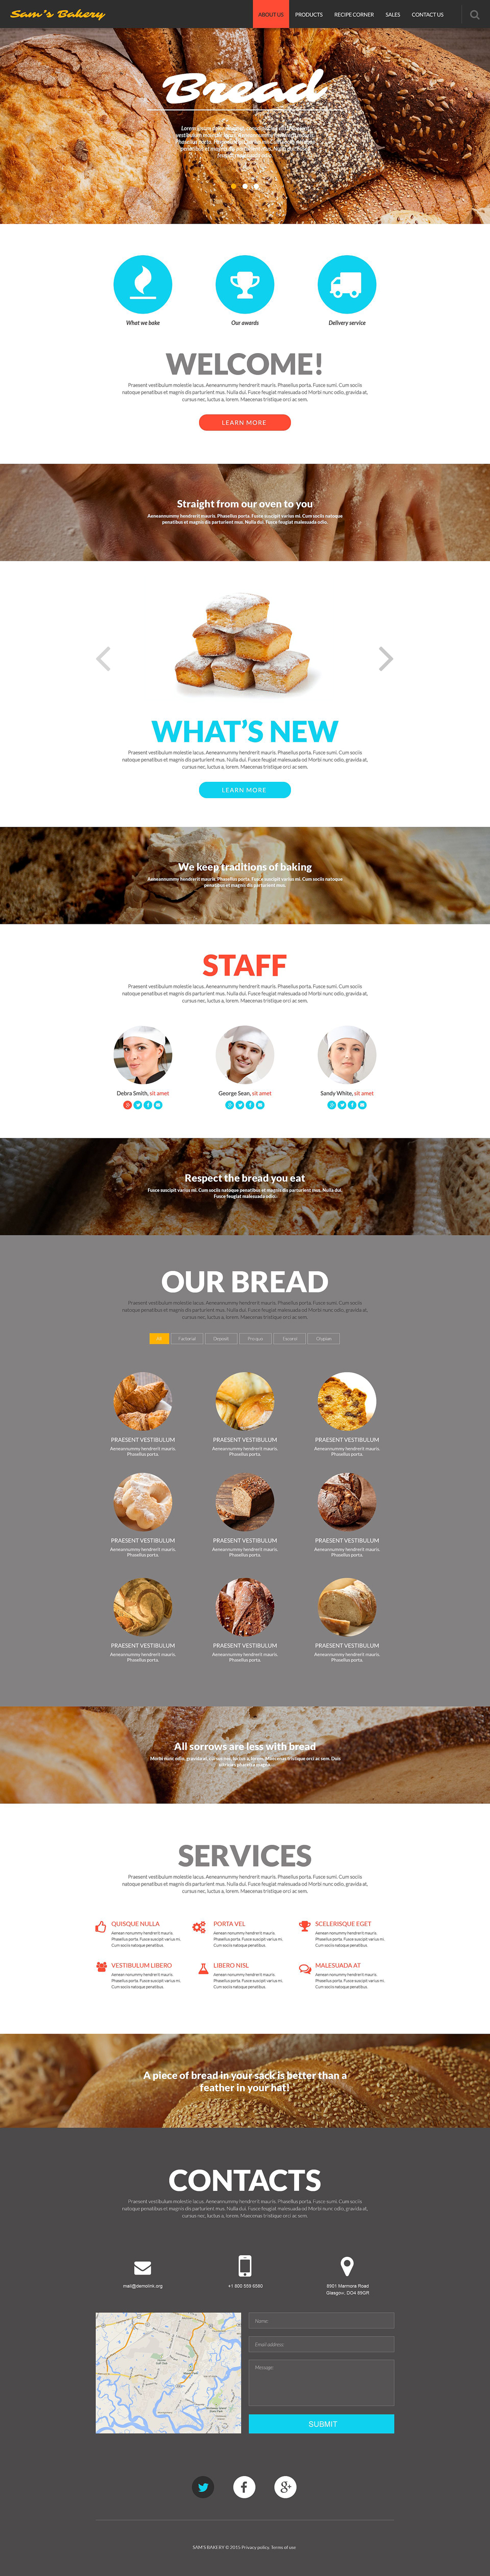 bakery-responsive-website-template-53200